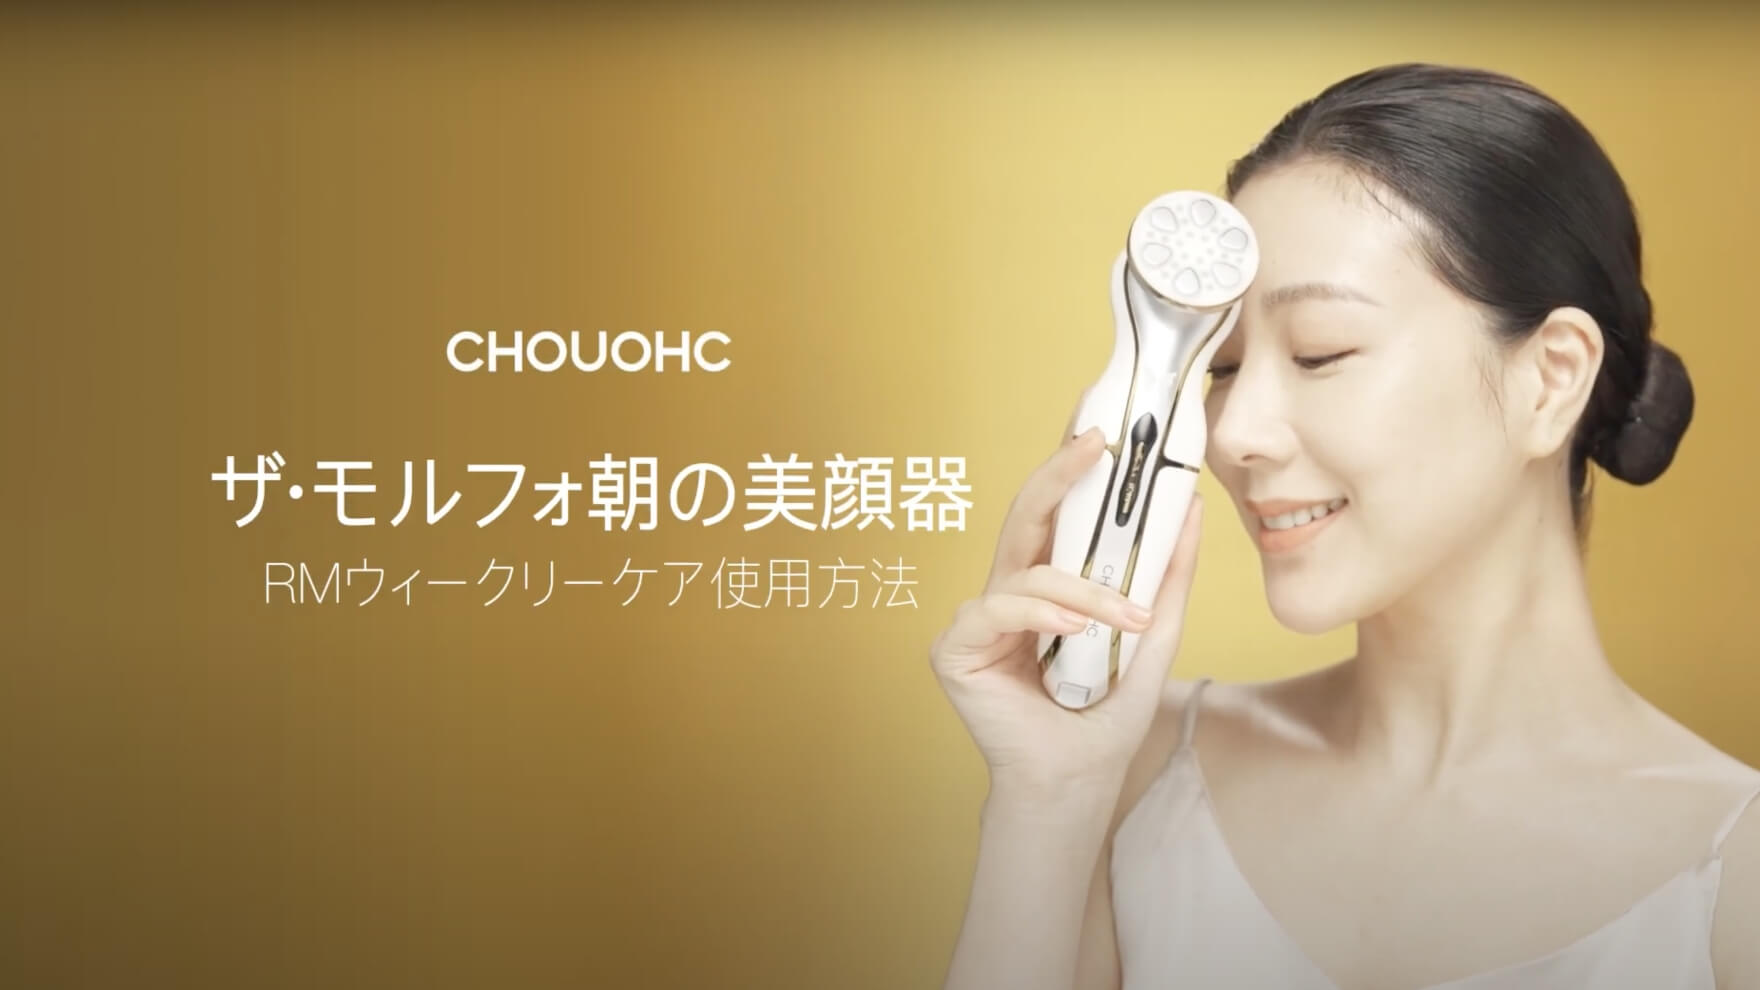 CHOUOHC THEMORPHO 美顔器 - 美容/健康